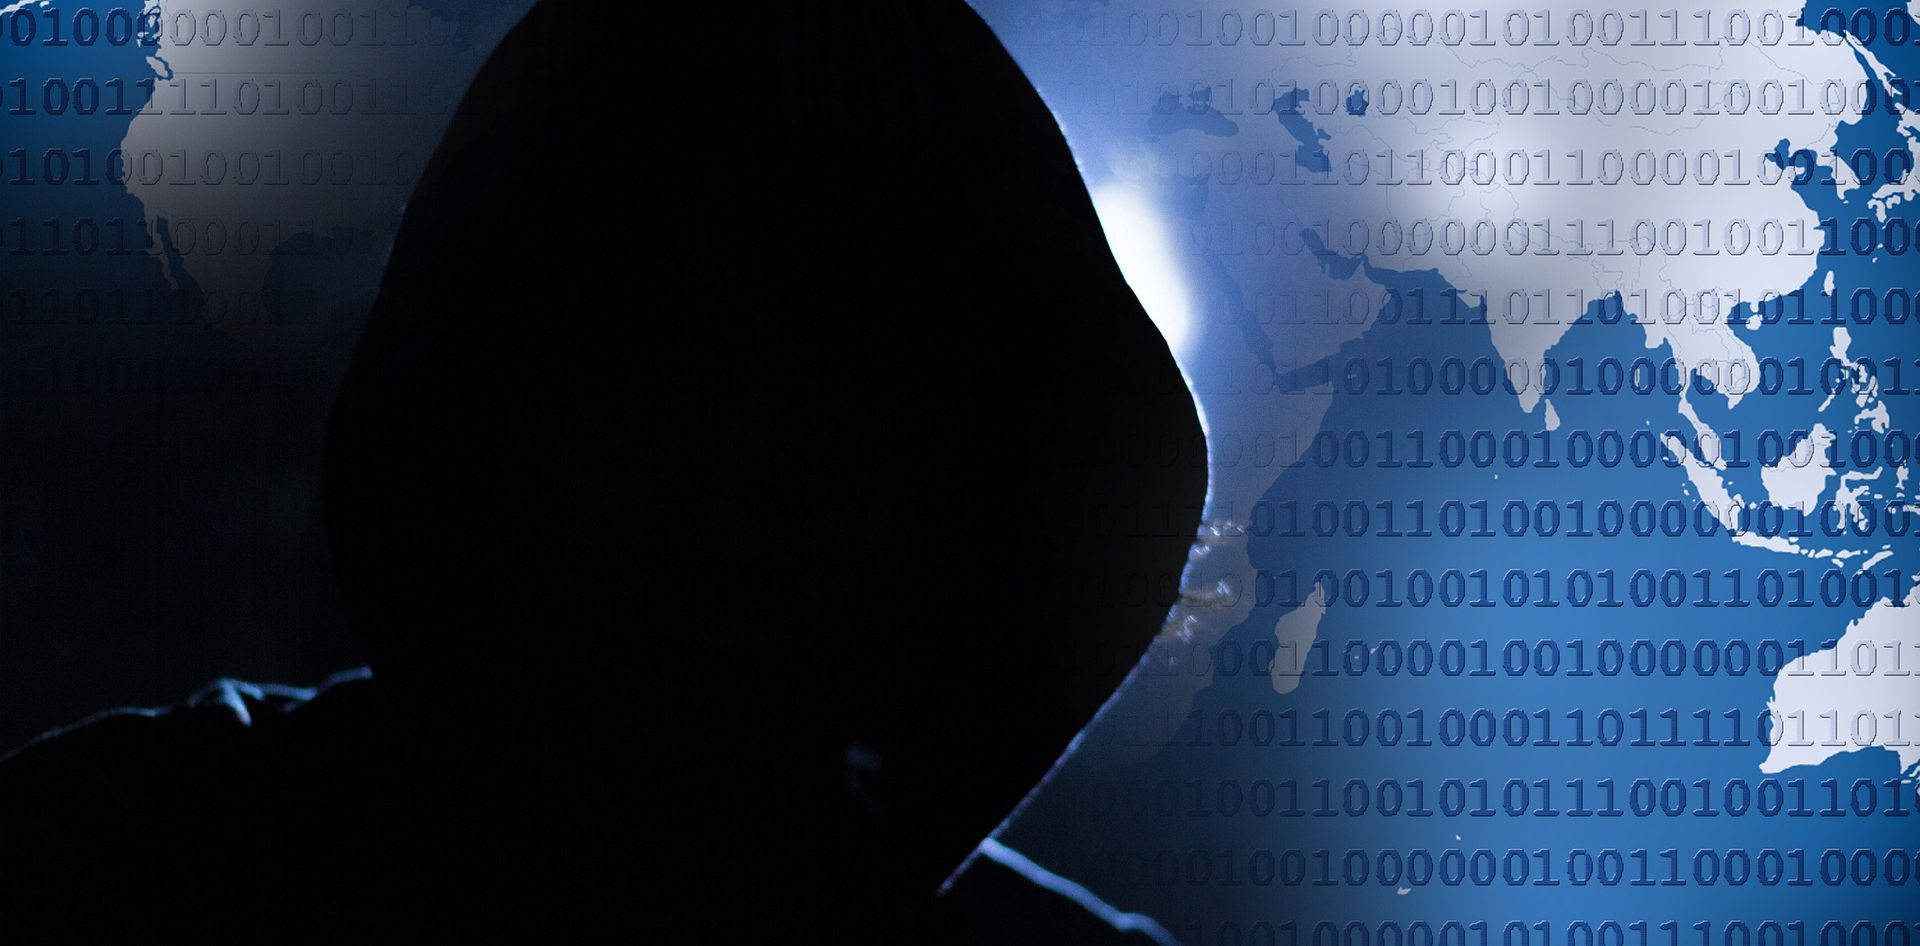 sosok berkerudung anonim di depan latar belakang peta kode biner